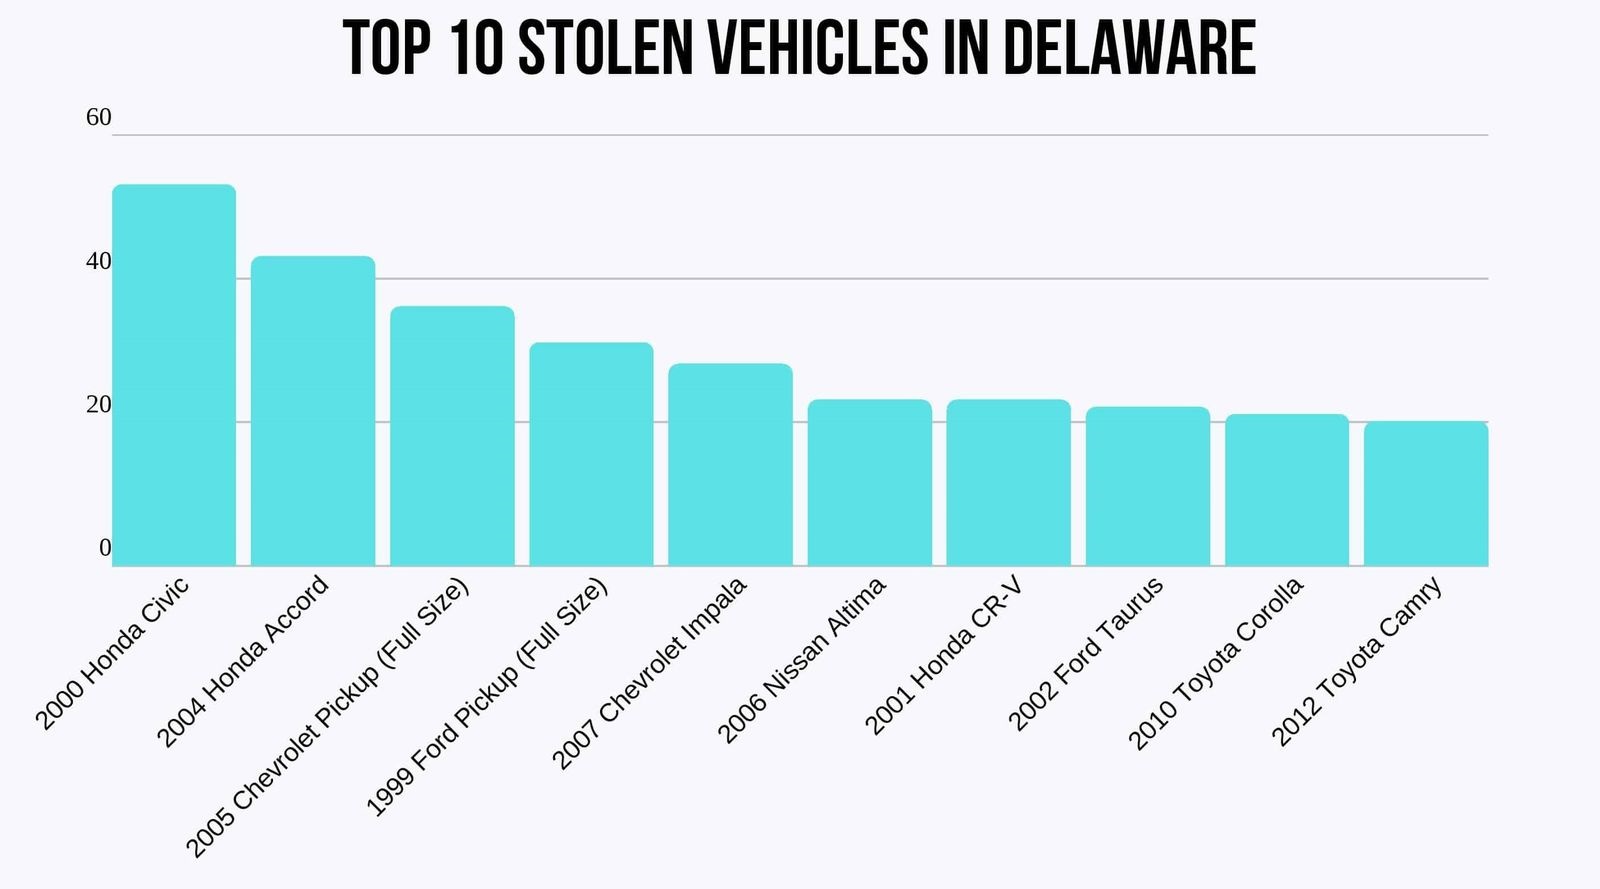 bar chart of the top 10 stolen vehicles in Delaware